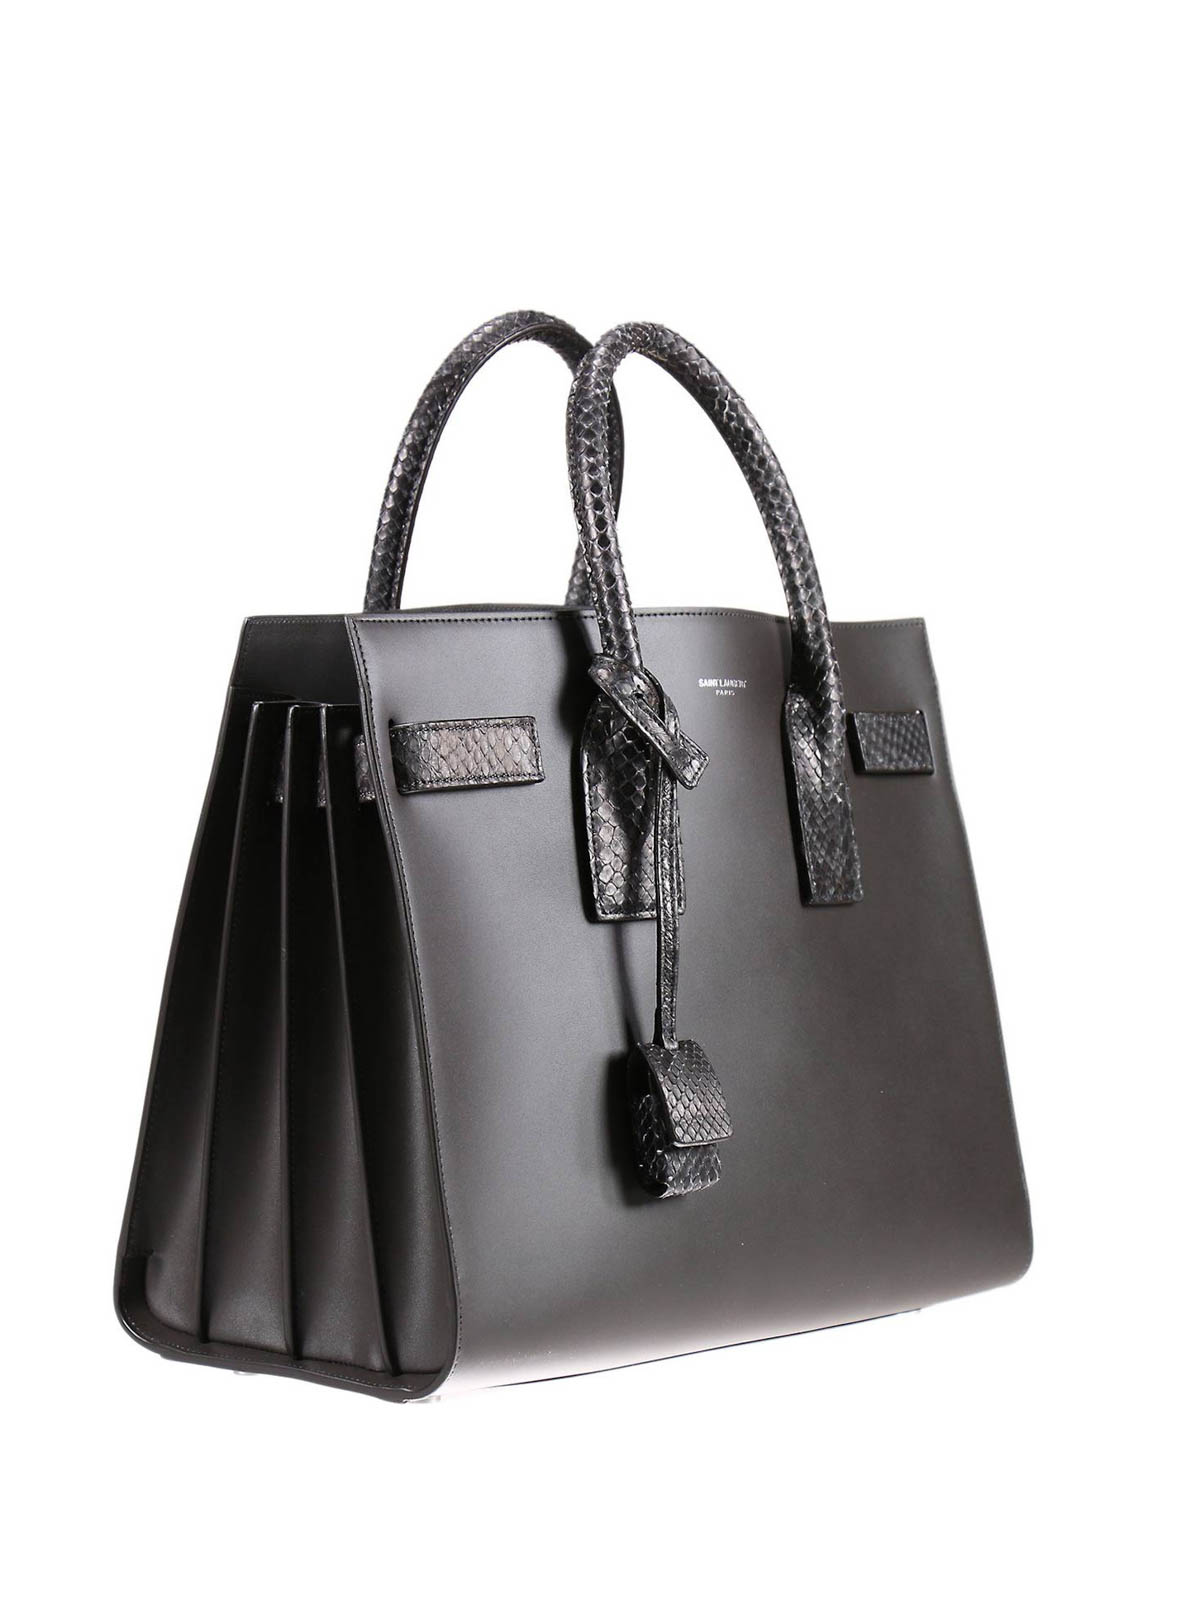 YSL Sac De Jour : r/handbags